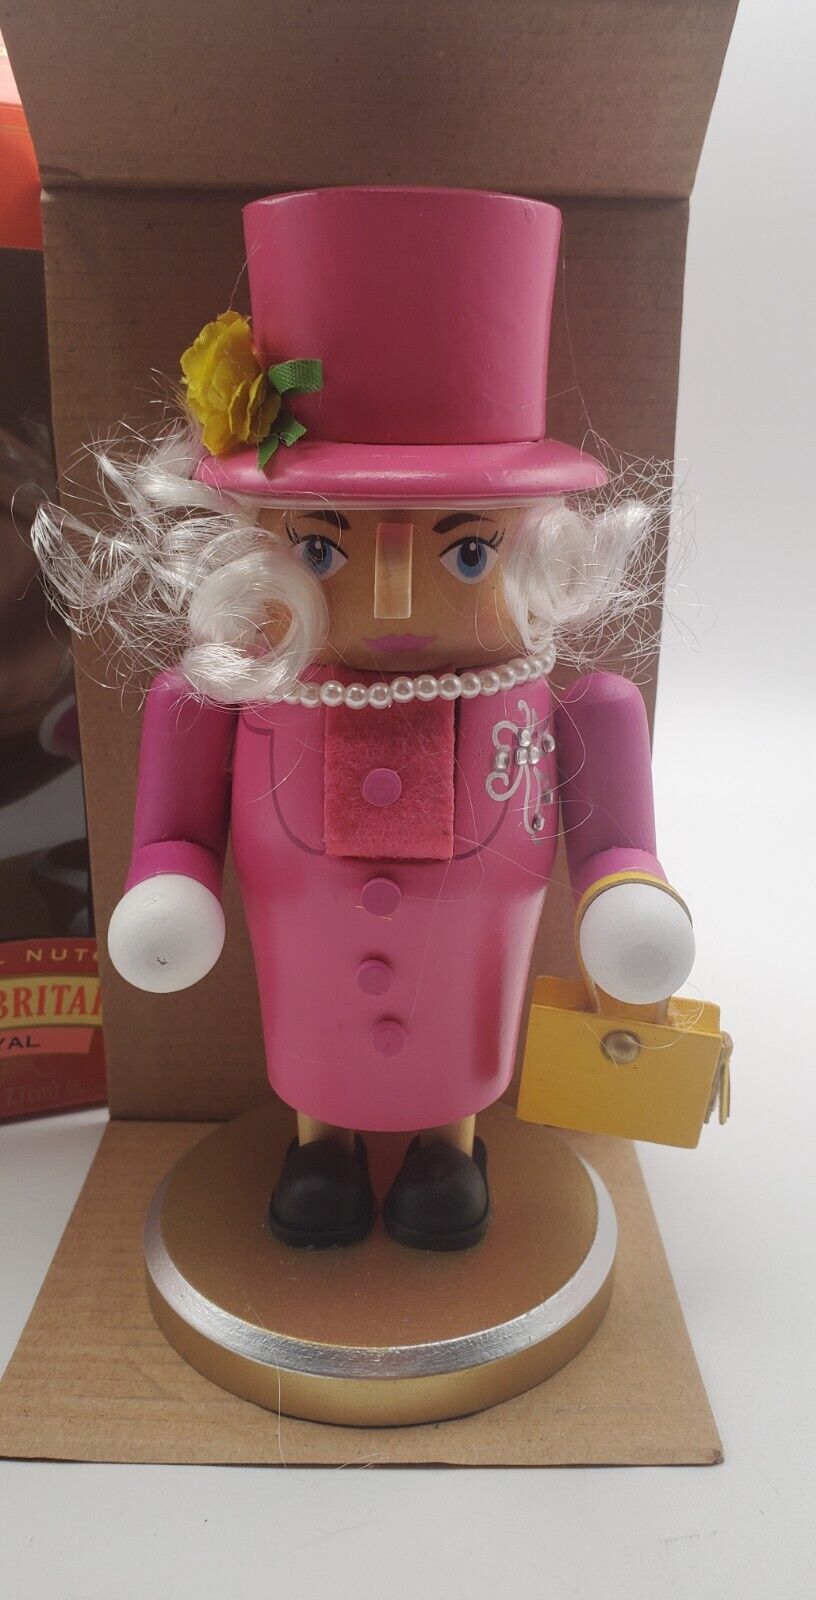 International Nutcracker Great Britain ROYAL QUEEN ELIZABETH Pink Outfit Edition